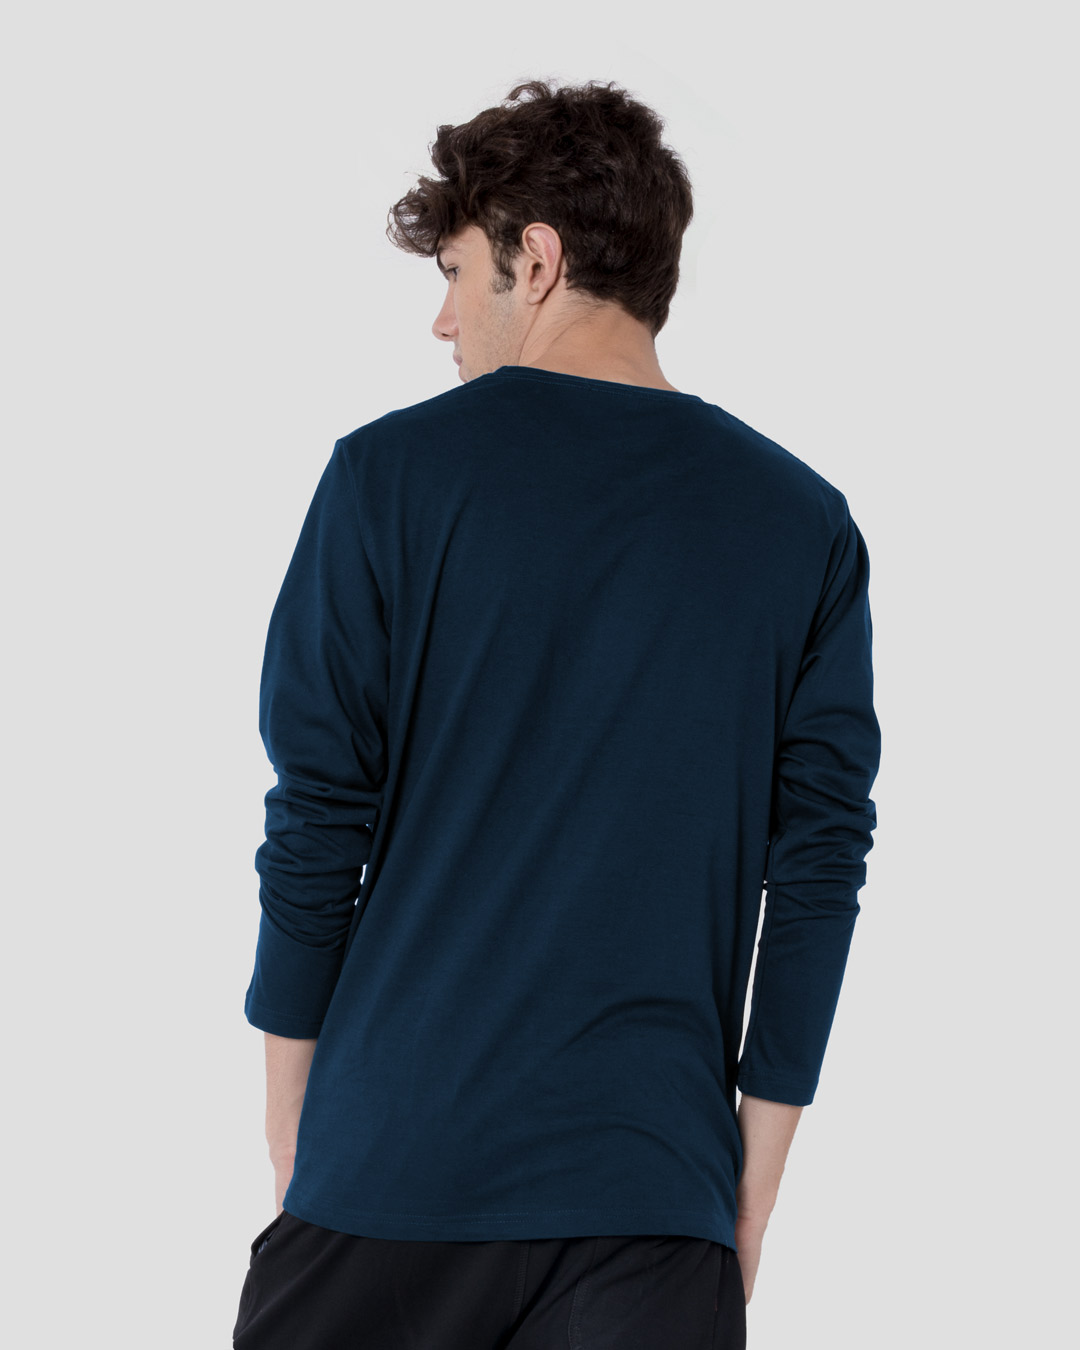 Shop Not Giving Up Full Sleeve T-Shirt Navy Blue-Back